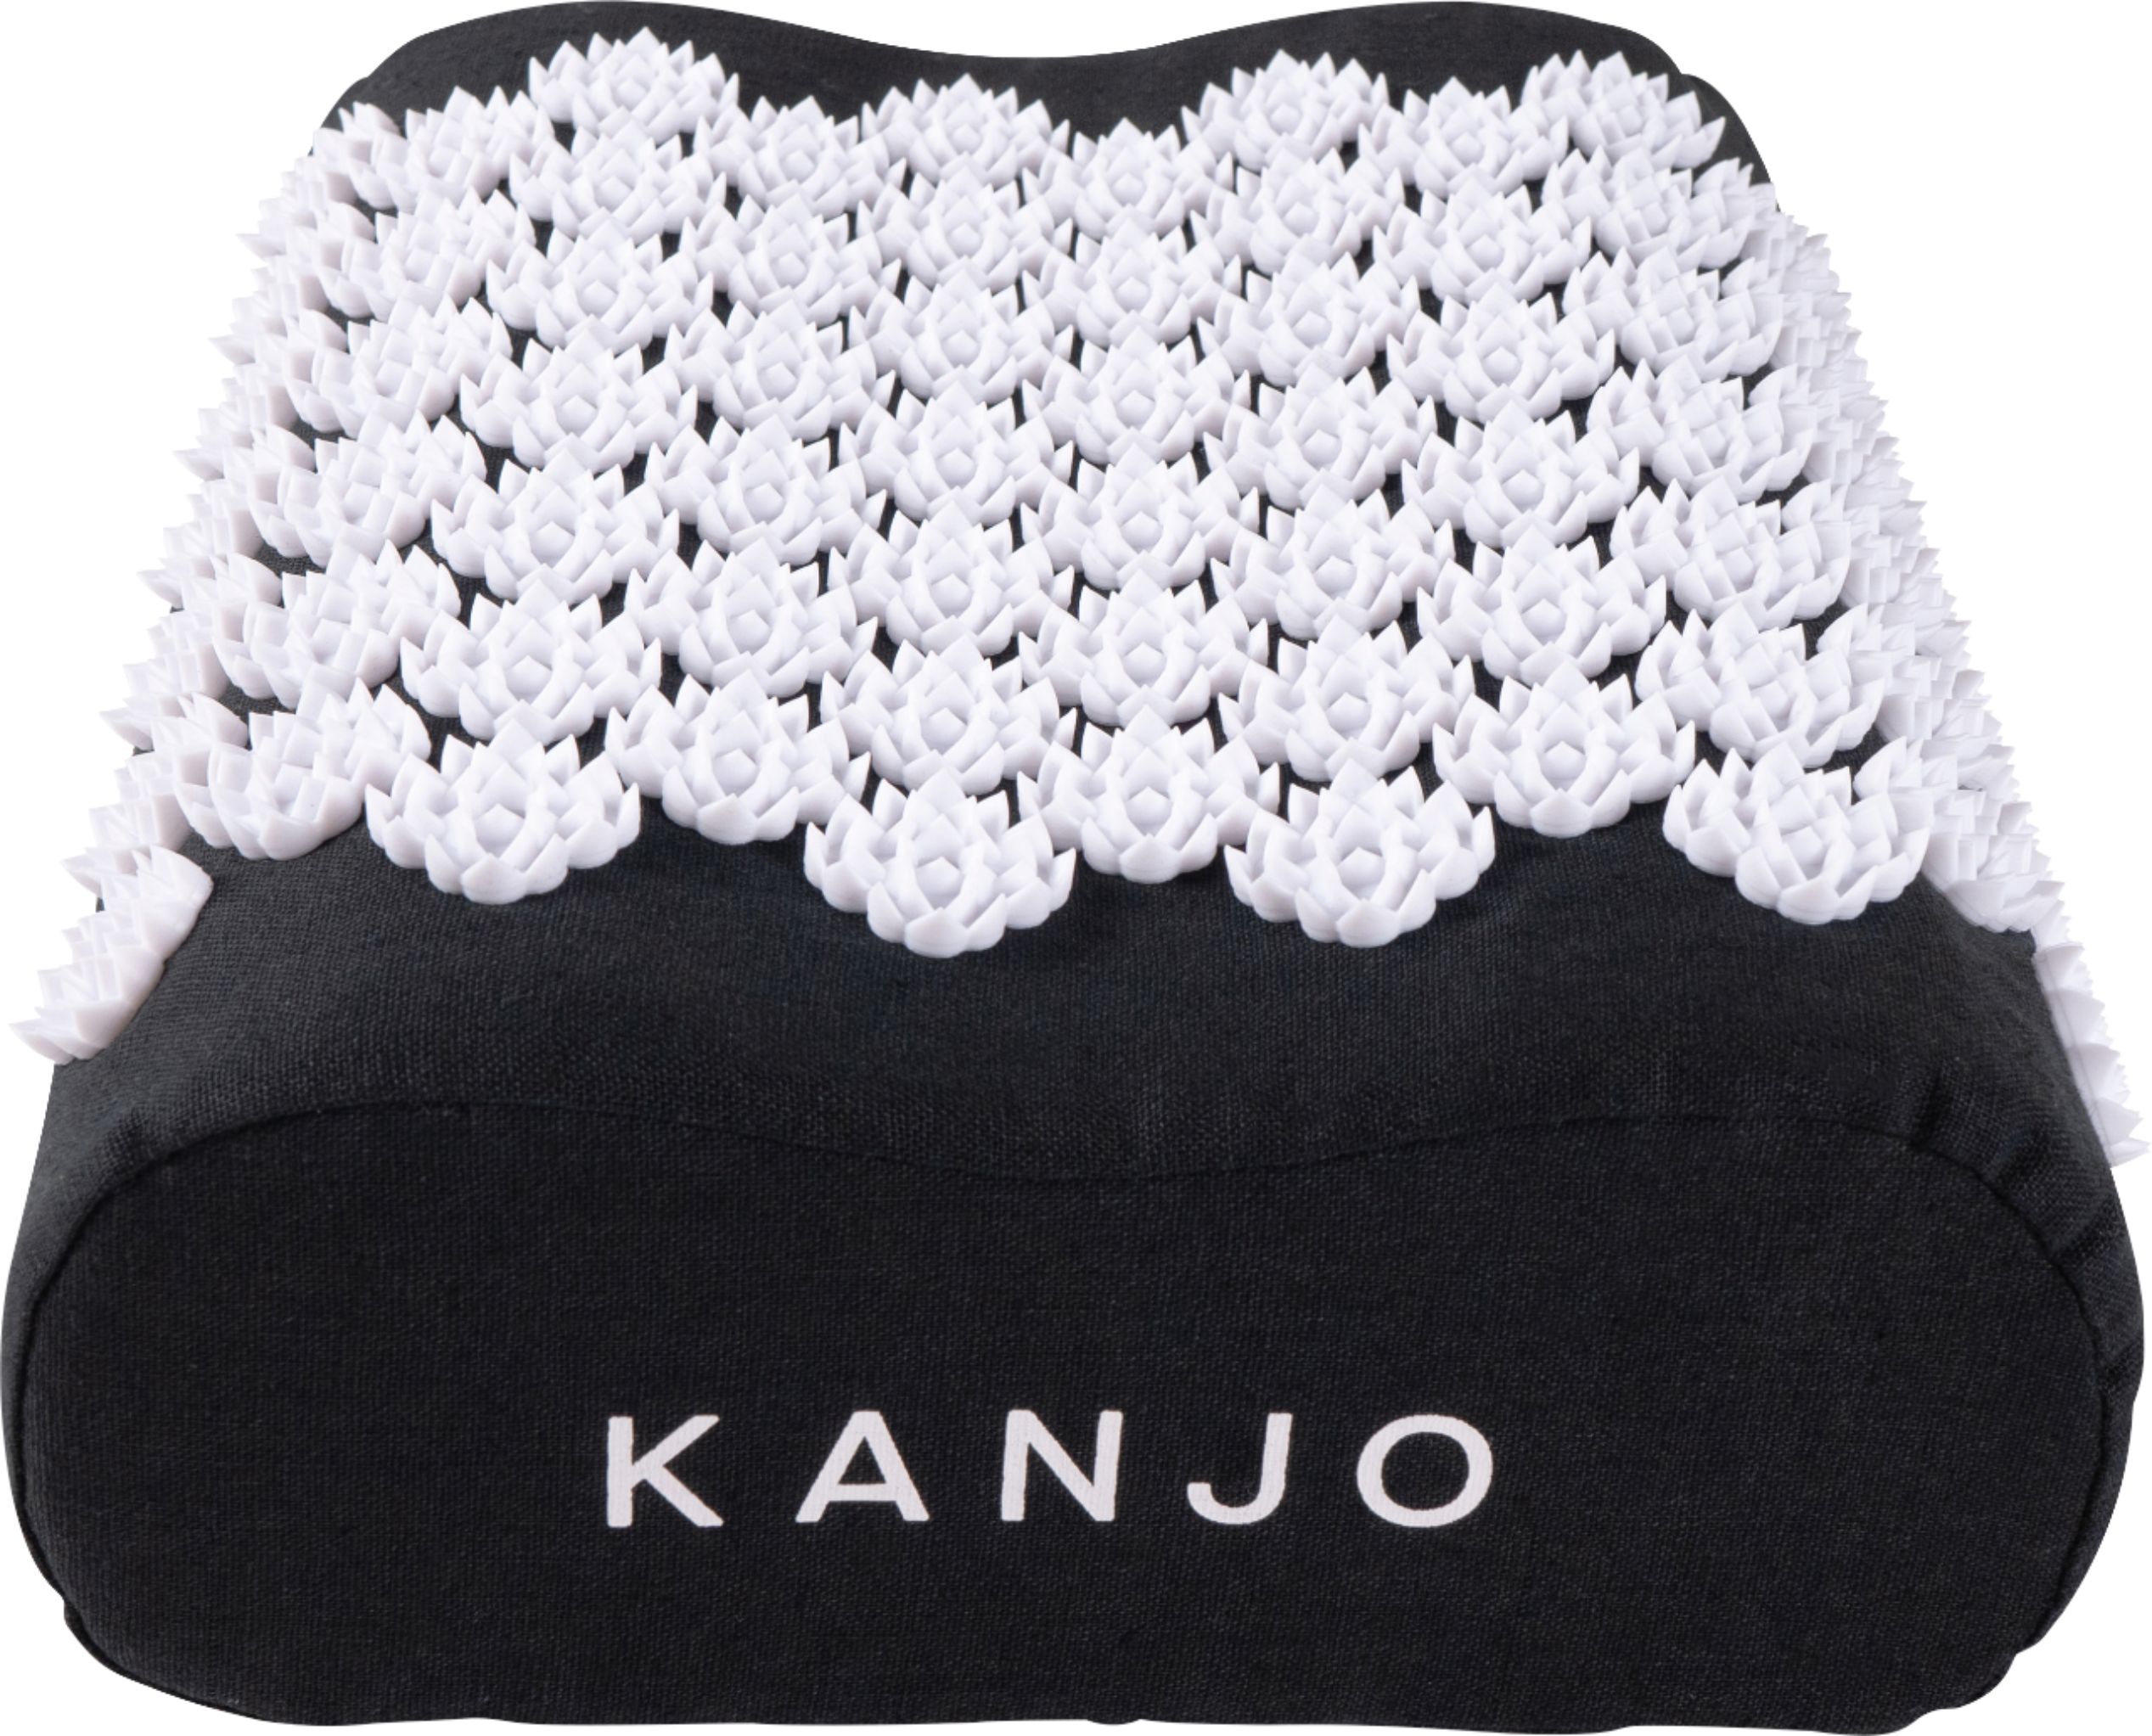 Angle View: Kanjo - Acupressure Cushion - Black